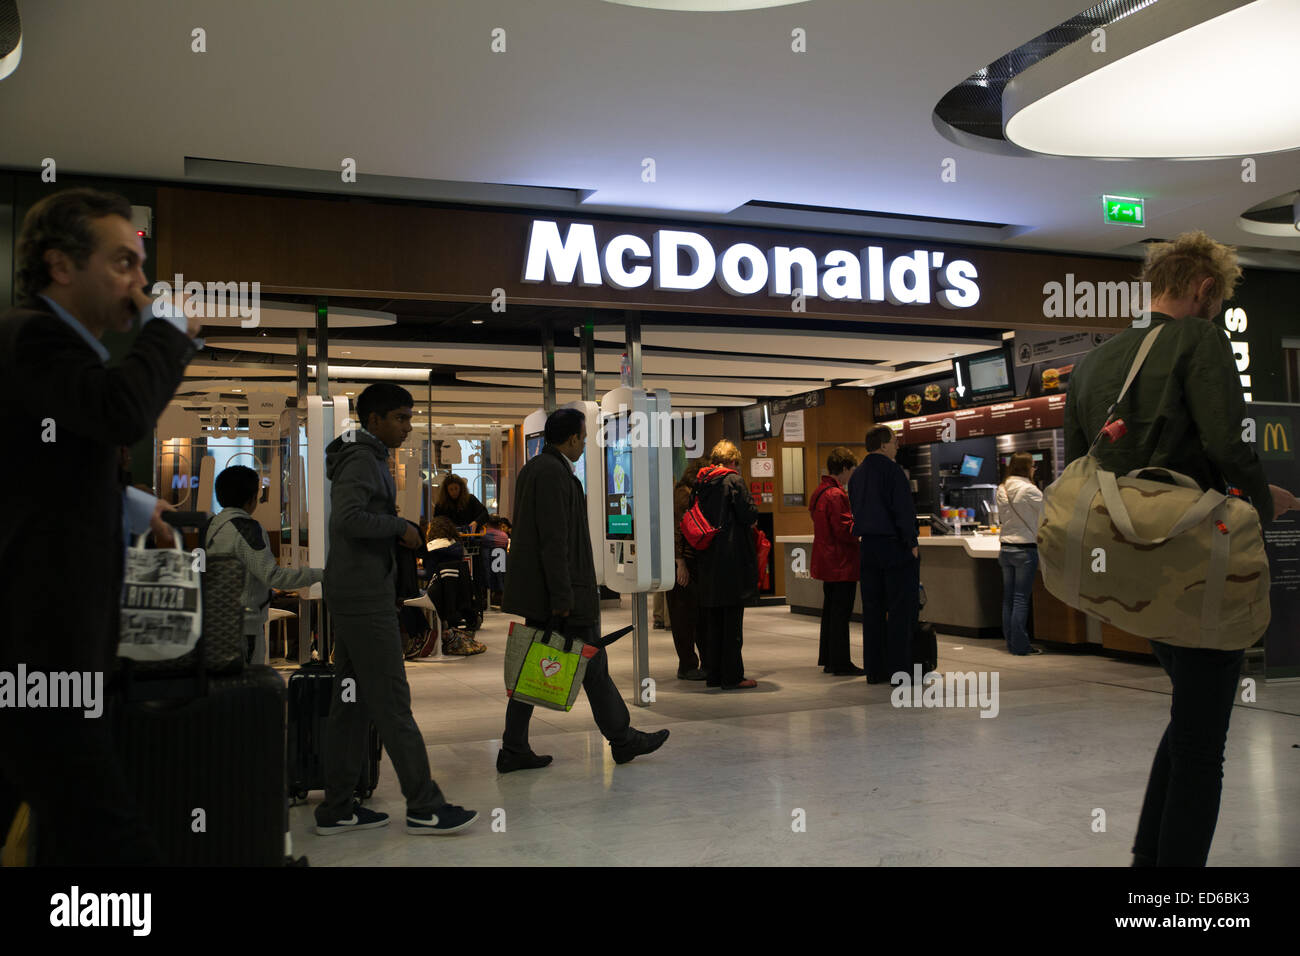 Mcdonalds restaurant inside Paris airport Stock Photo